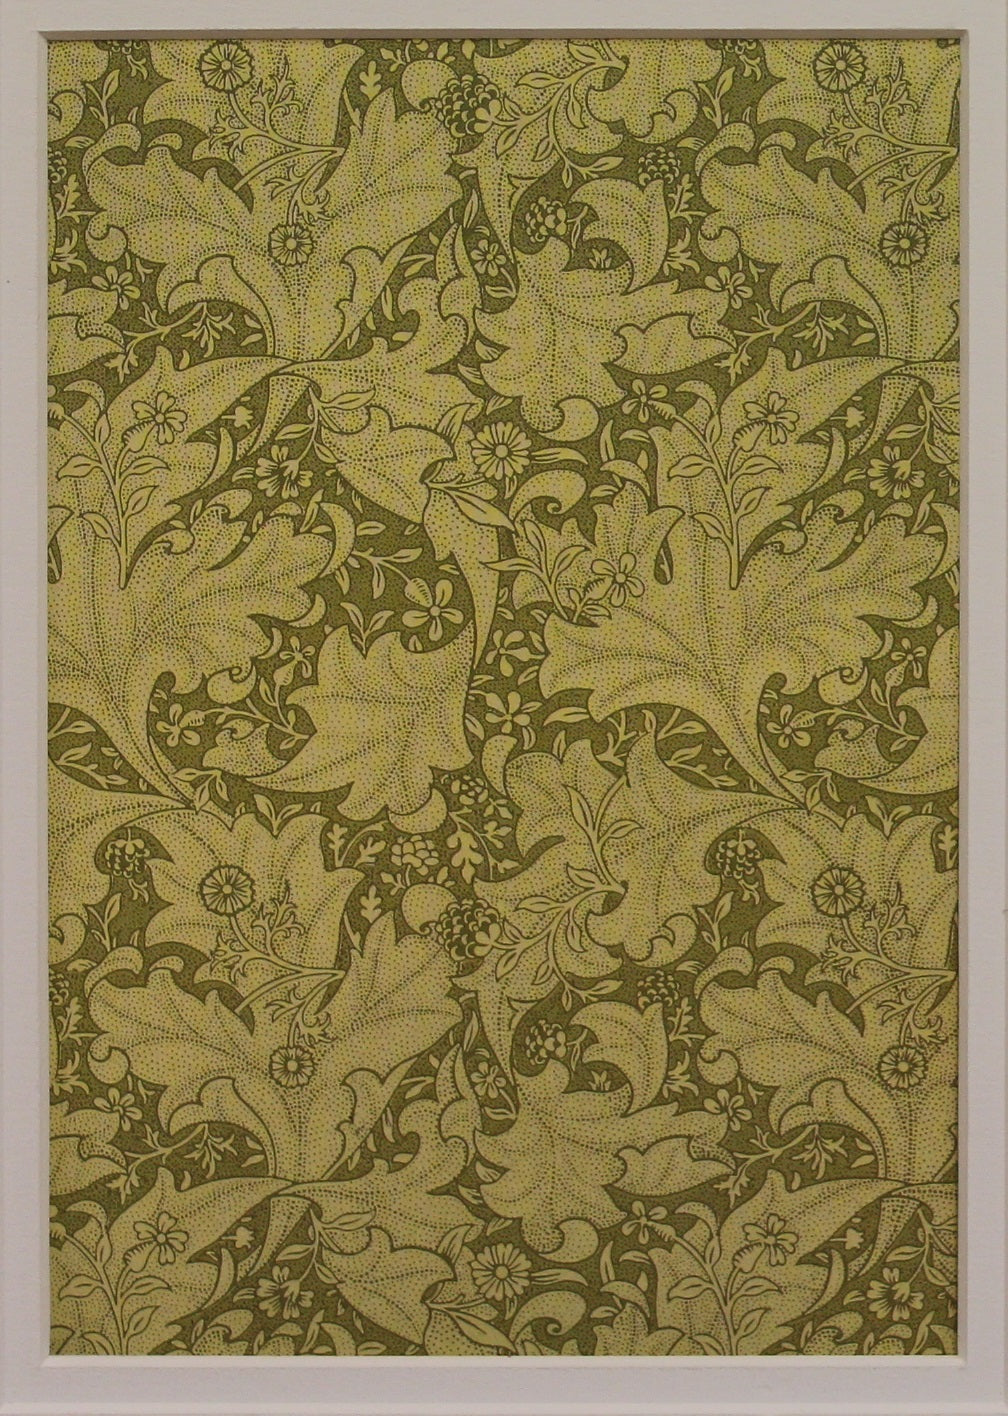 Decorator, Morris William, Wallflower - Green, Art Nouveau, c1890